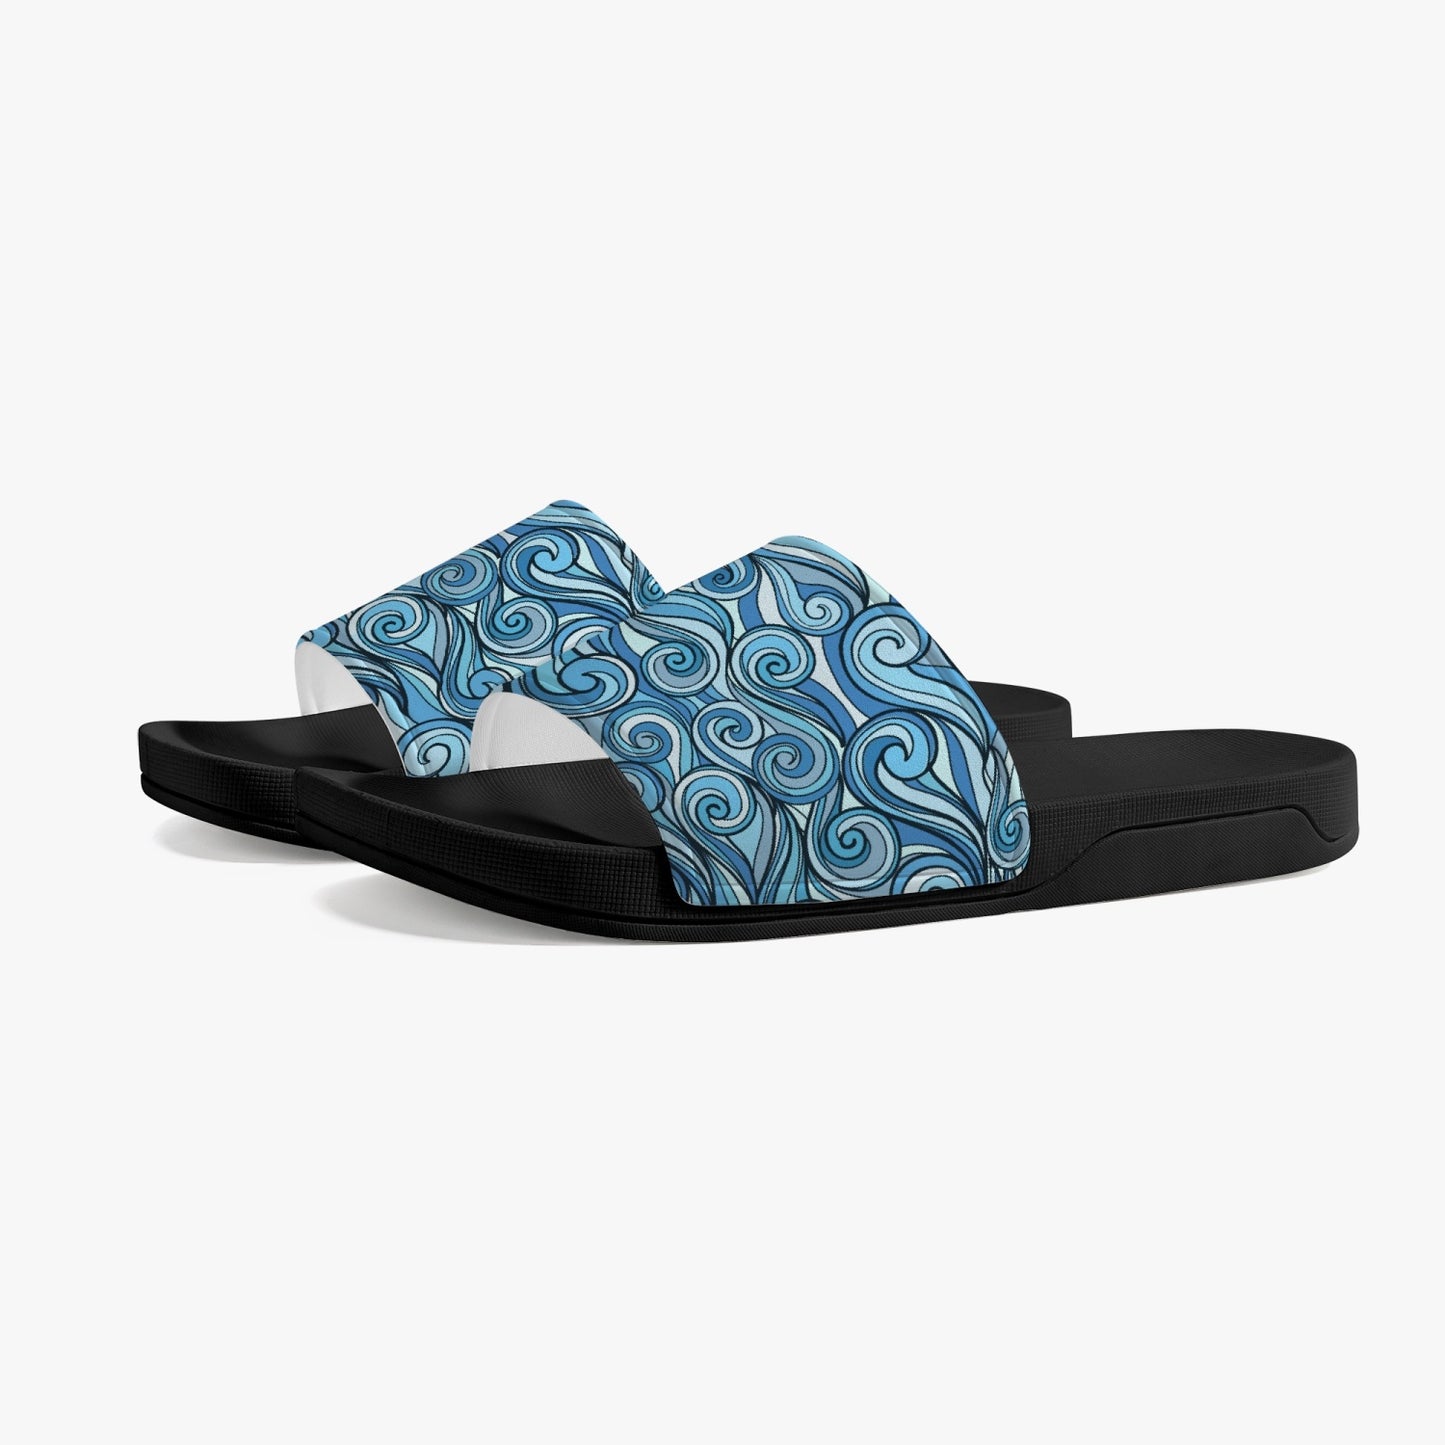 Groovy Waves Slides Sandals, Men Women Blue Ocean Black Designer Shoe Flat Wedge Slippers Casual Flip Flops Slip On Starcove Fashion